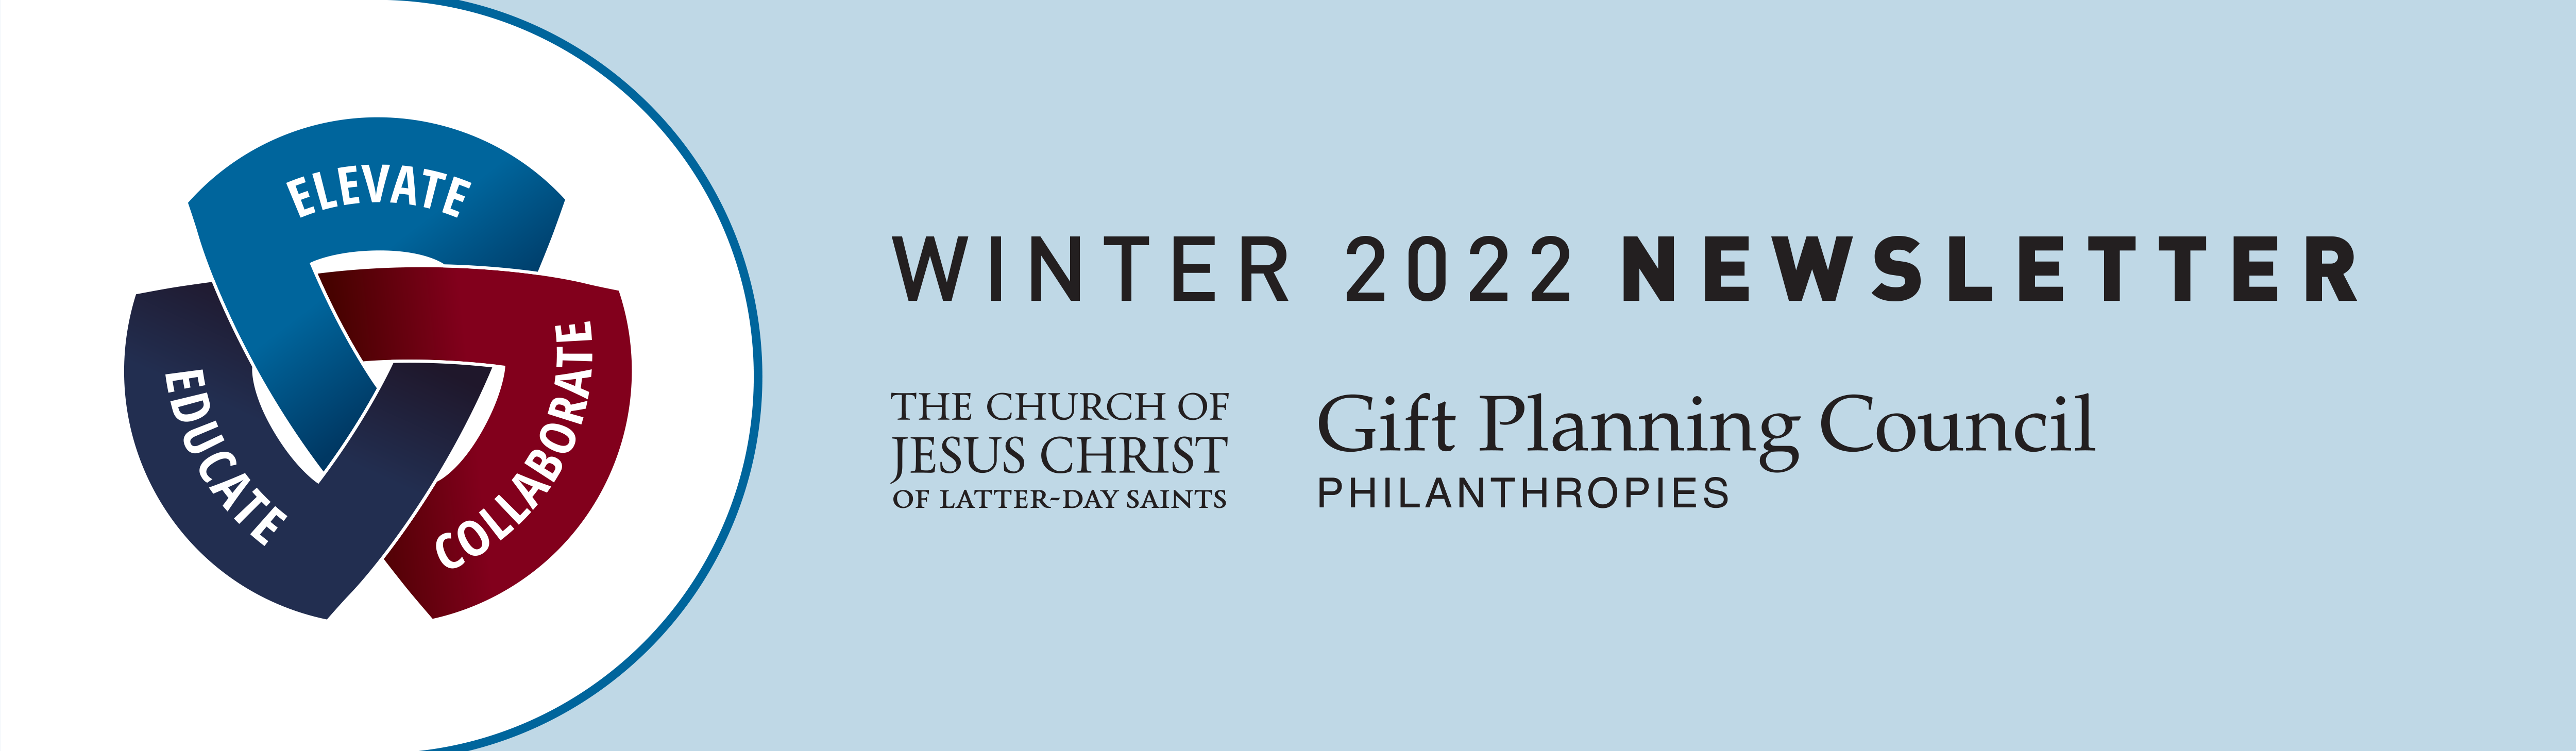 gift planning council newsletter banner